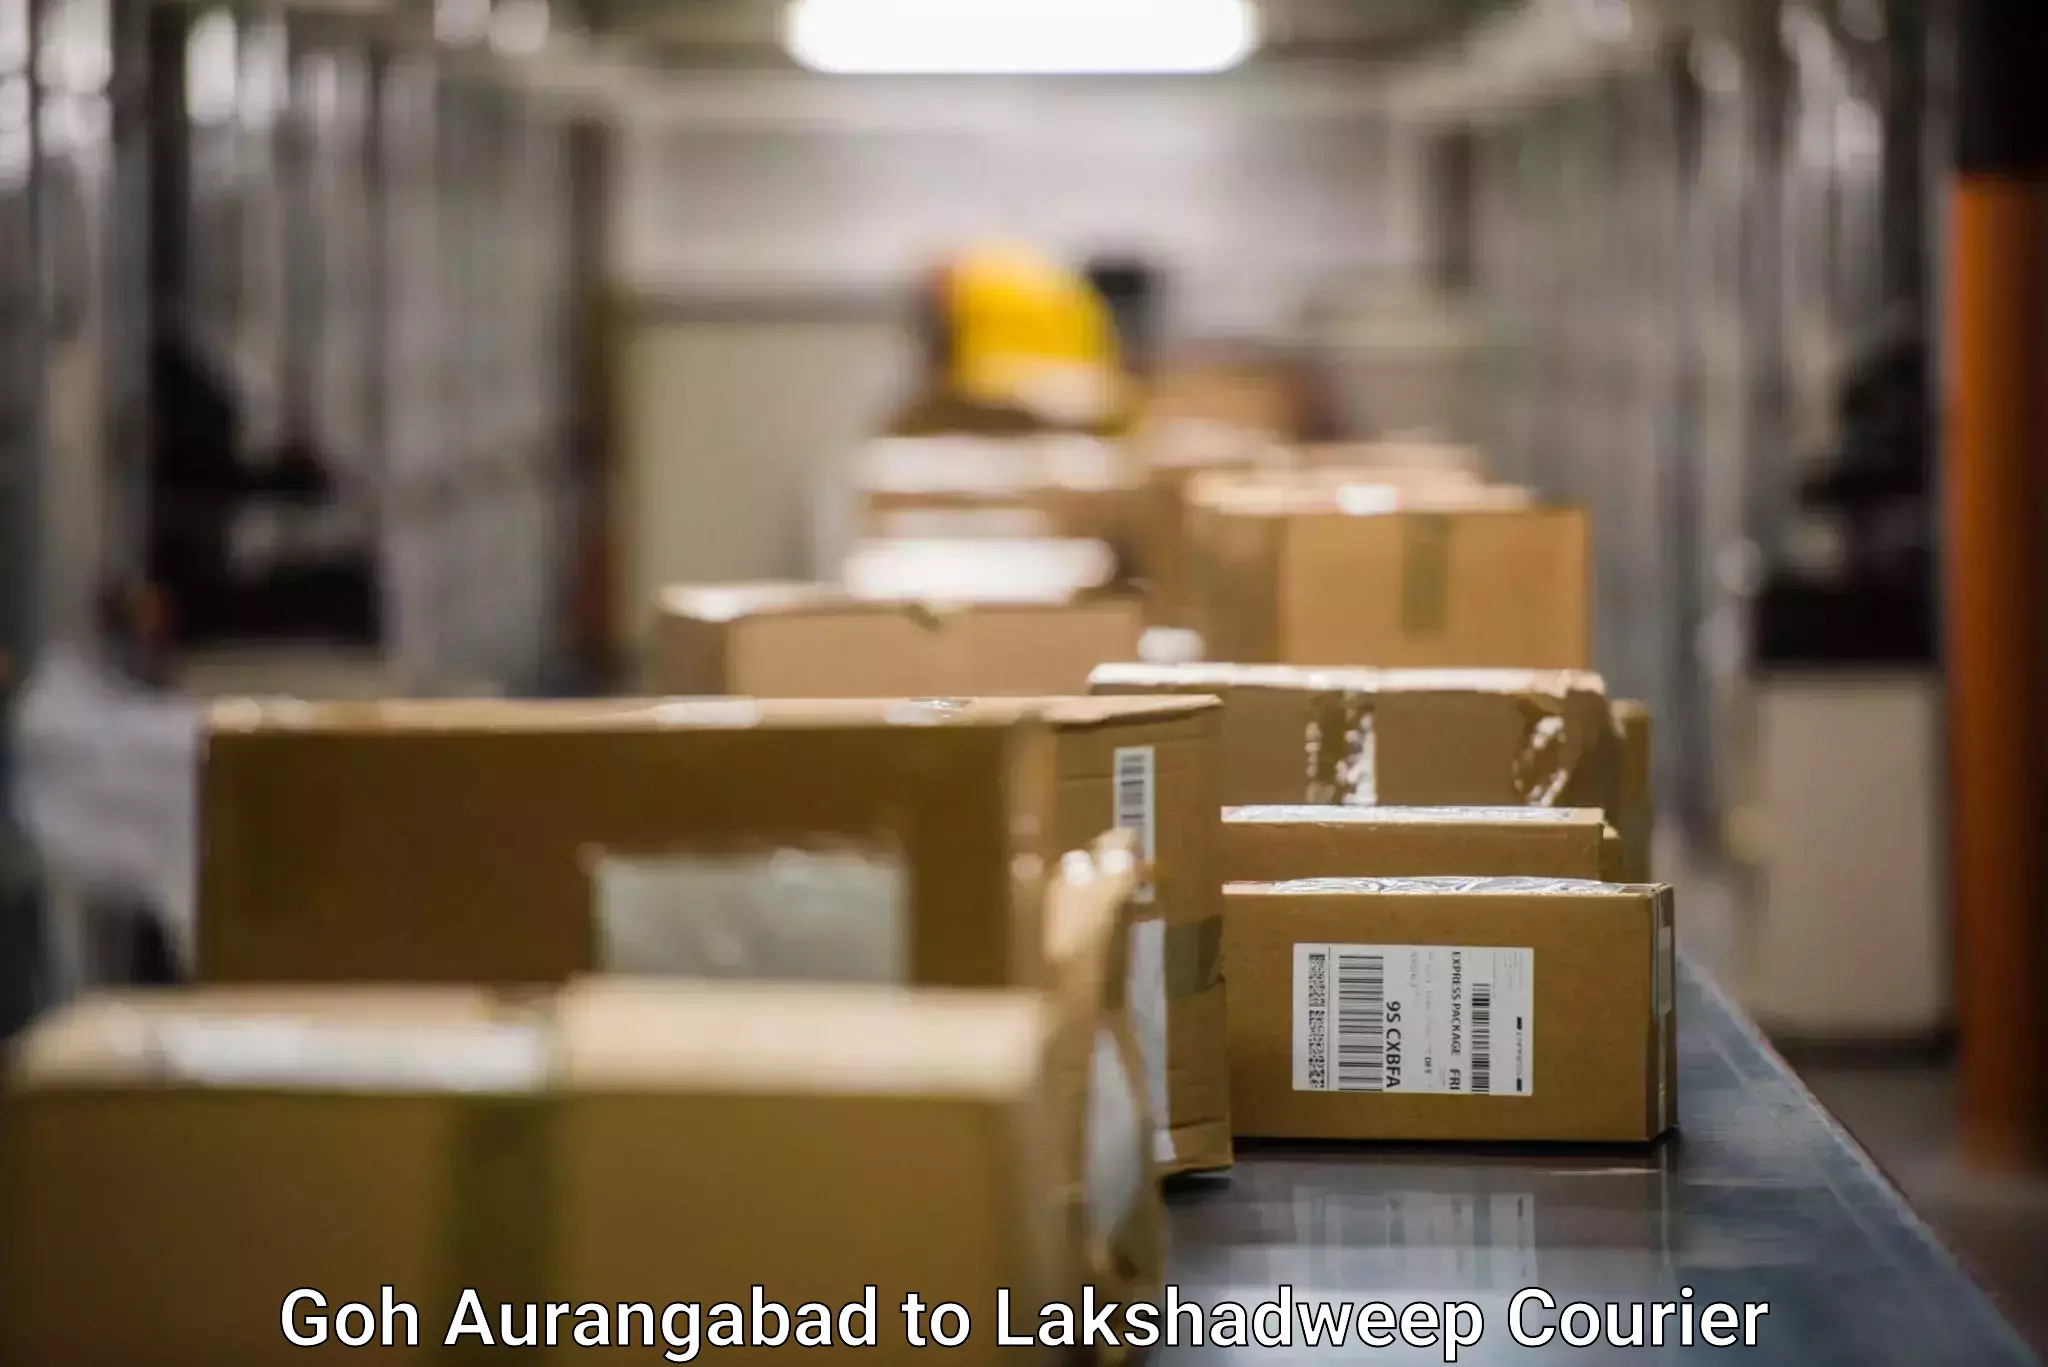 User-friendly courier app Goh Aurangabad to Lakshadweep